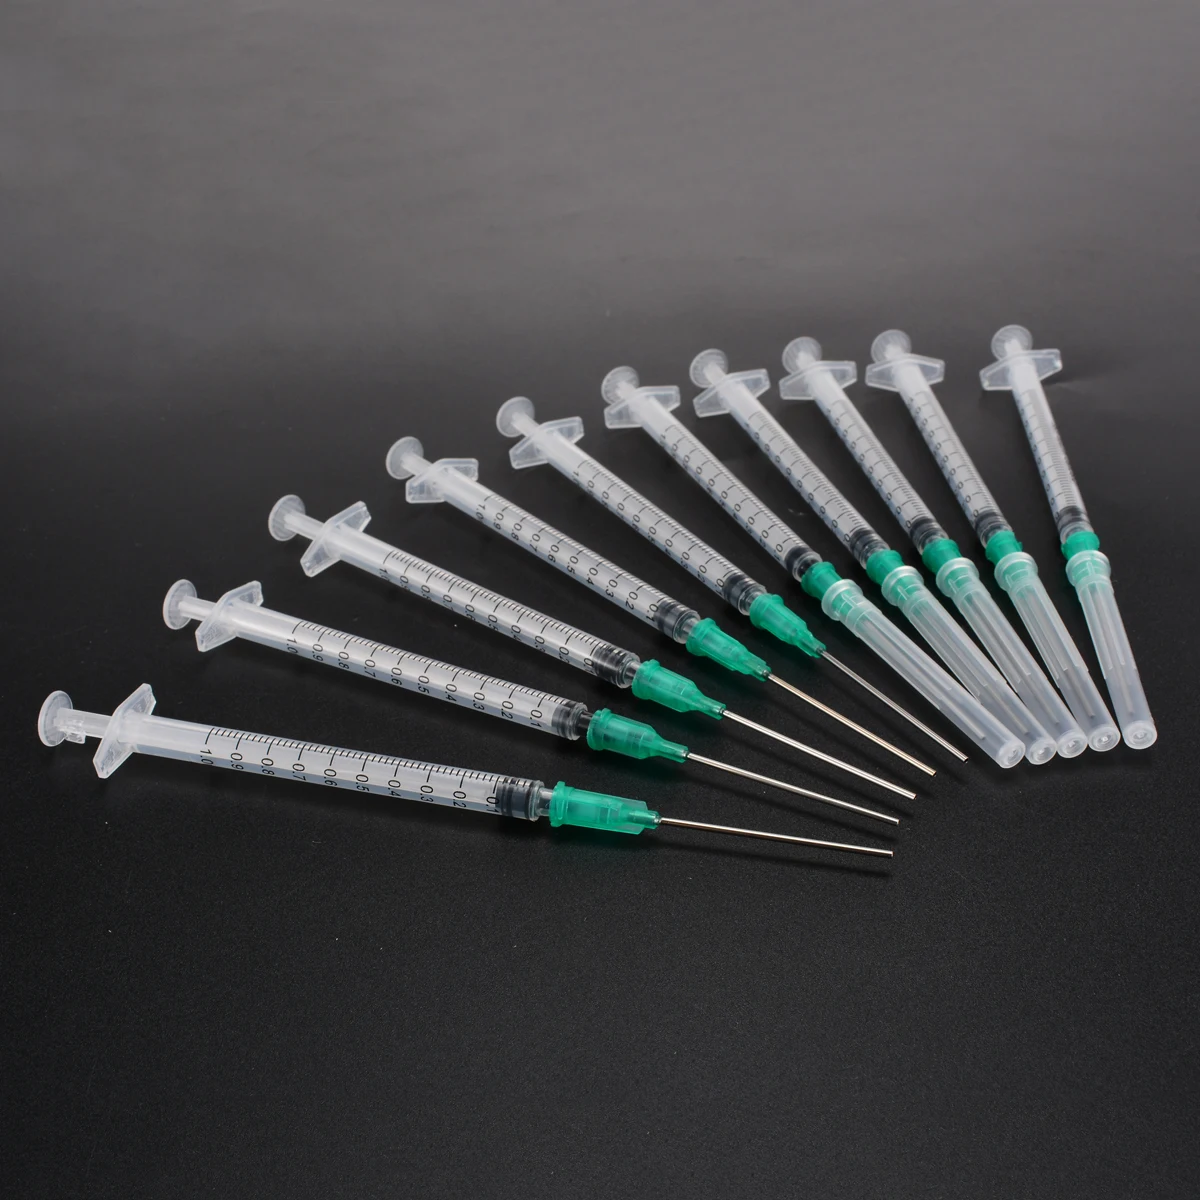 10pcs/Set 1ml Measure Syringe +18Ga 1.5 inch Blunt Tip Needle + Protective Cover Caps Kit for Industrial Glue Syringe